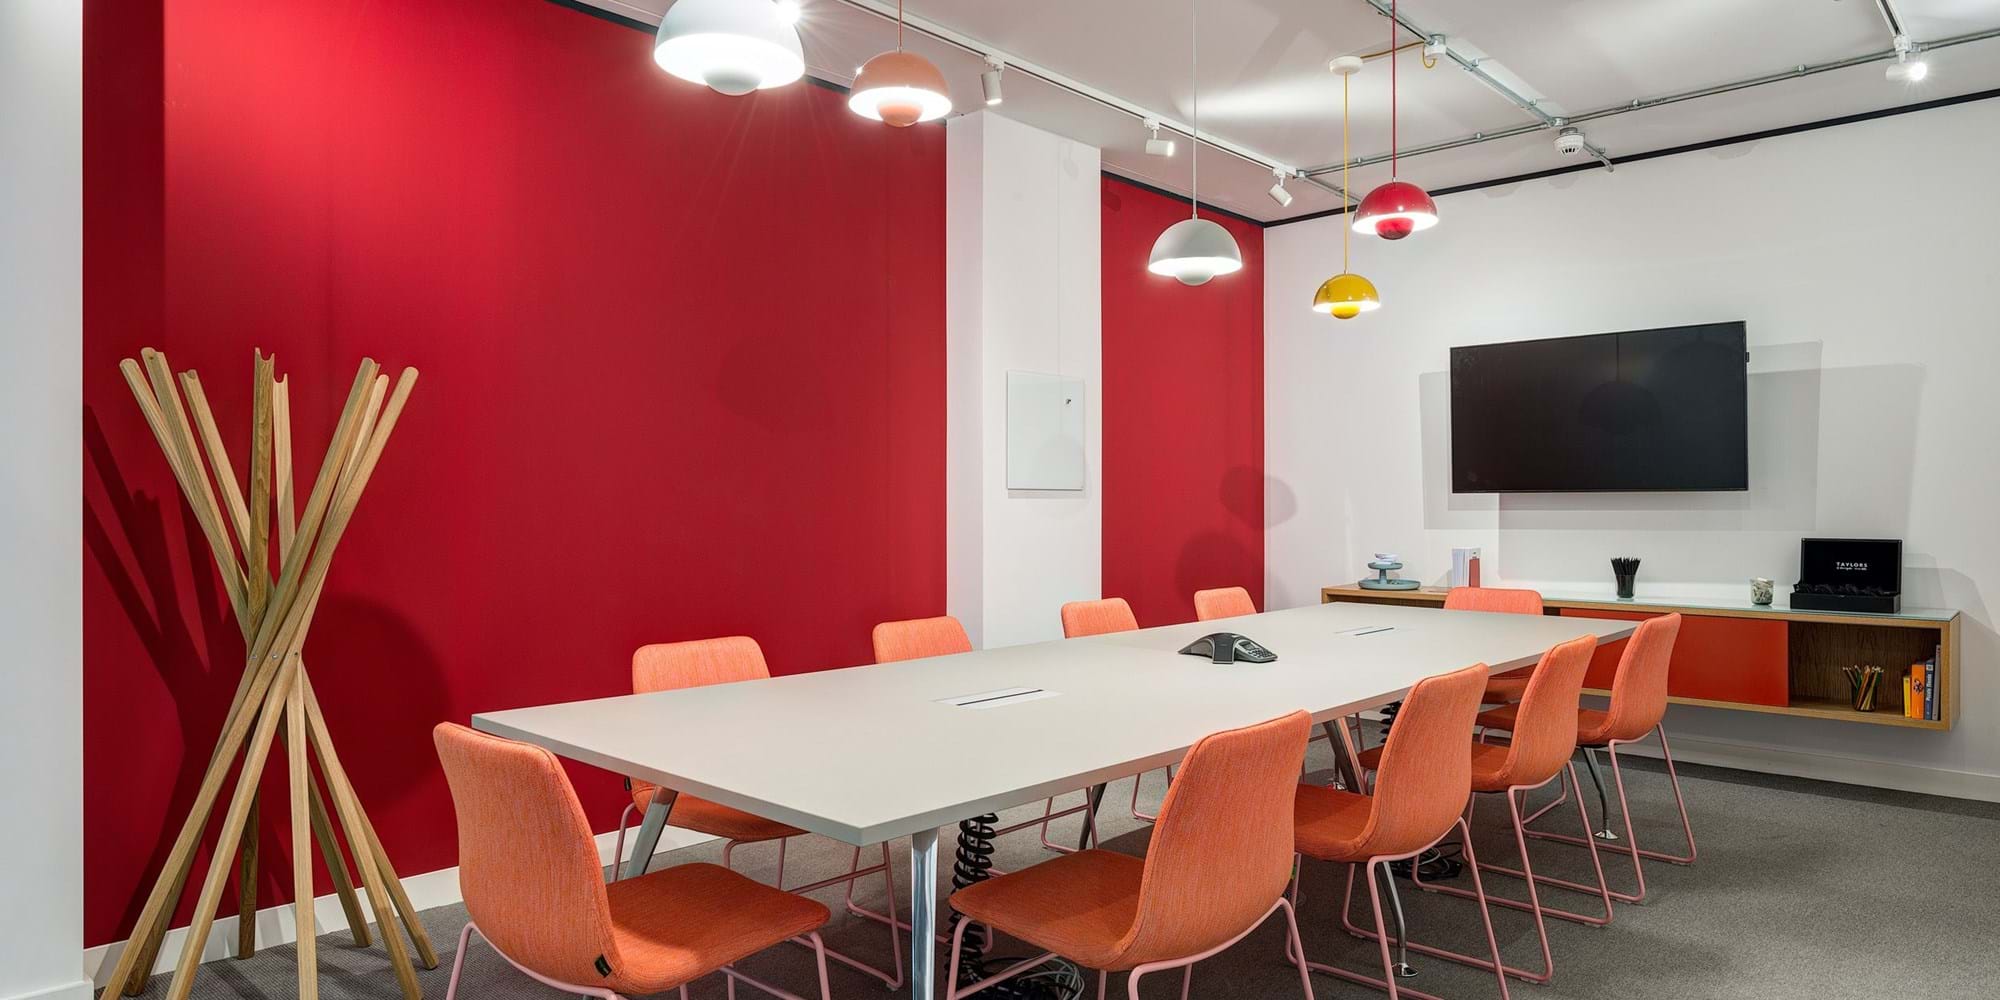 Modus Workspace office design, fit out and refurbishment - Spaces - Uxbridge - Spaces Uxbridge 14 highres sRGB.jpg